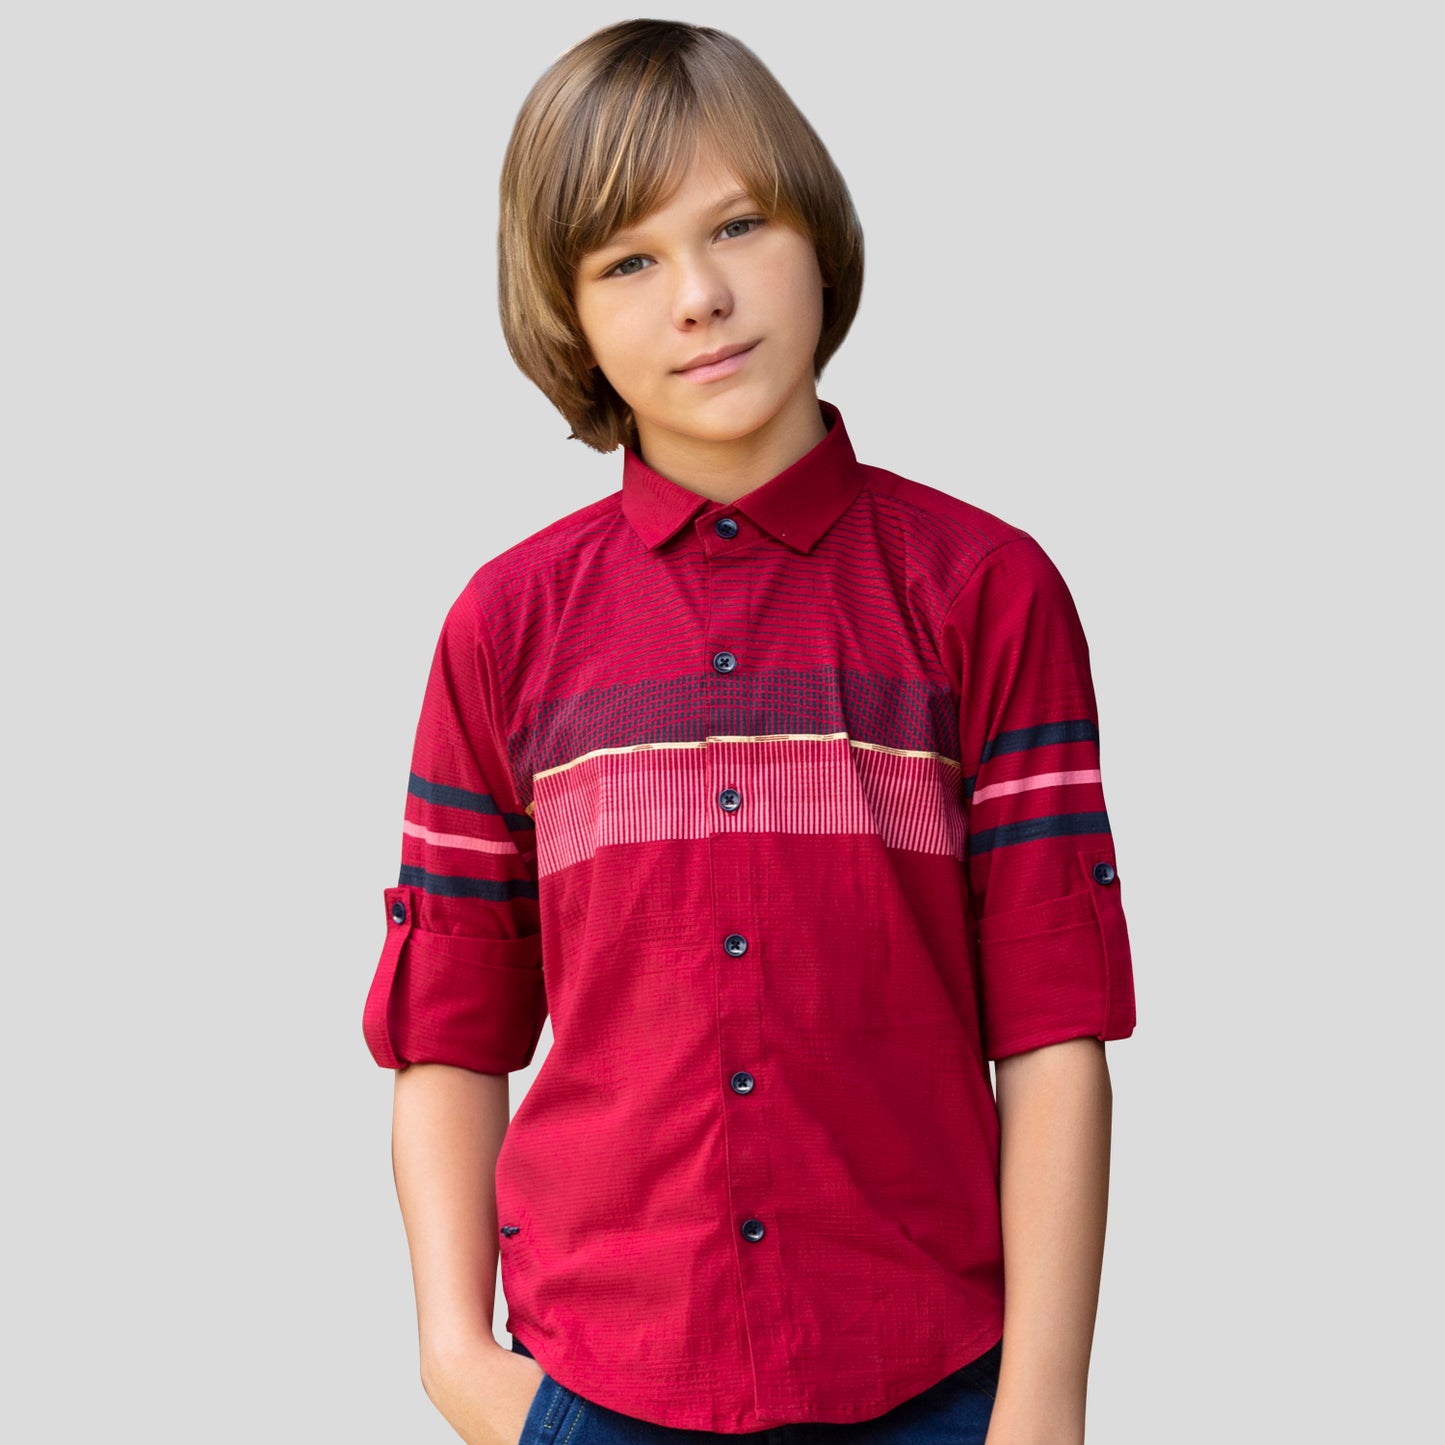 MashUp Stylish Classic printed shirt for Young boys